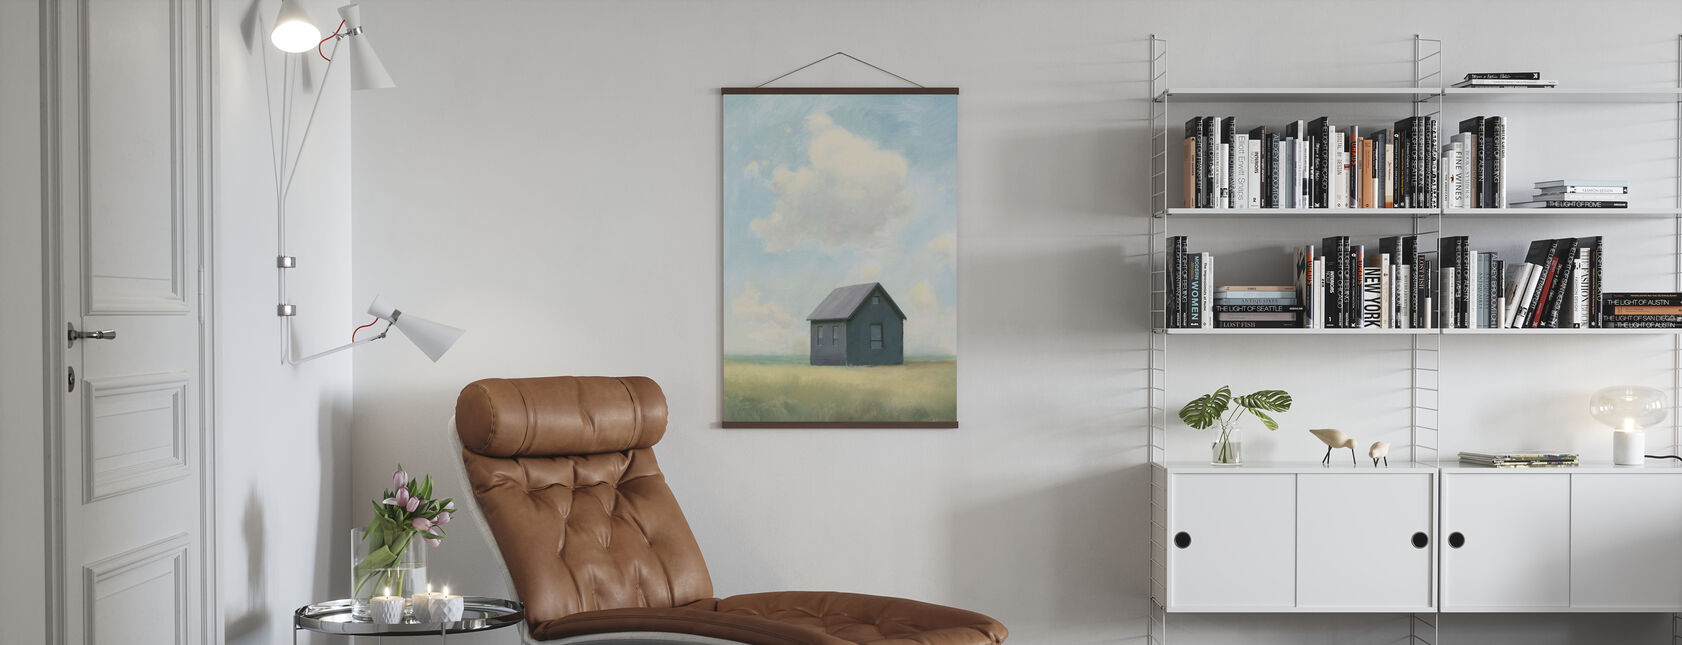 Lonely Landscape - Poster - Living Room